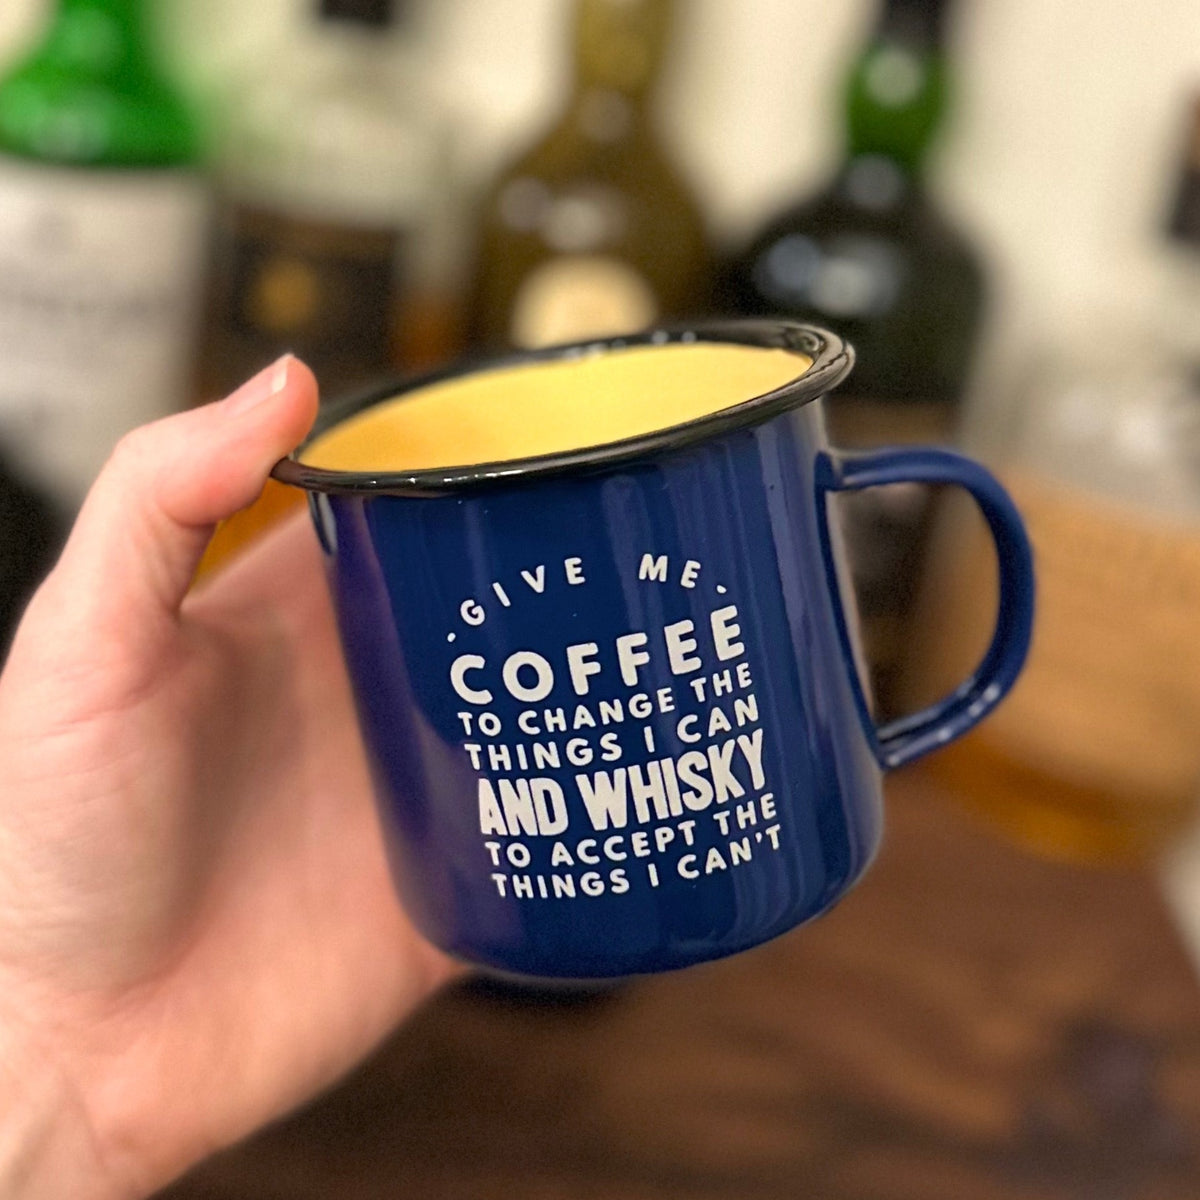 Probably Whisky 11oz Enamel Coffee Camp Mug – Thistle & Stitch